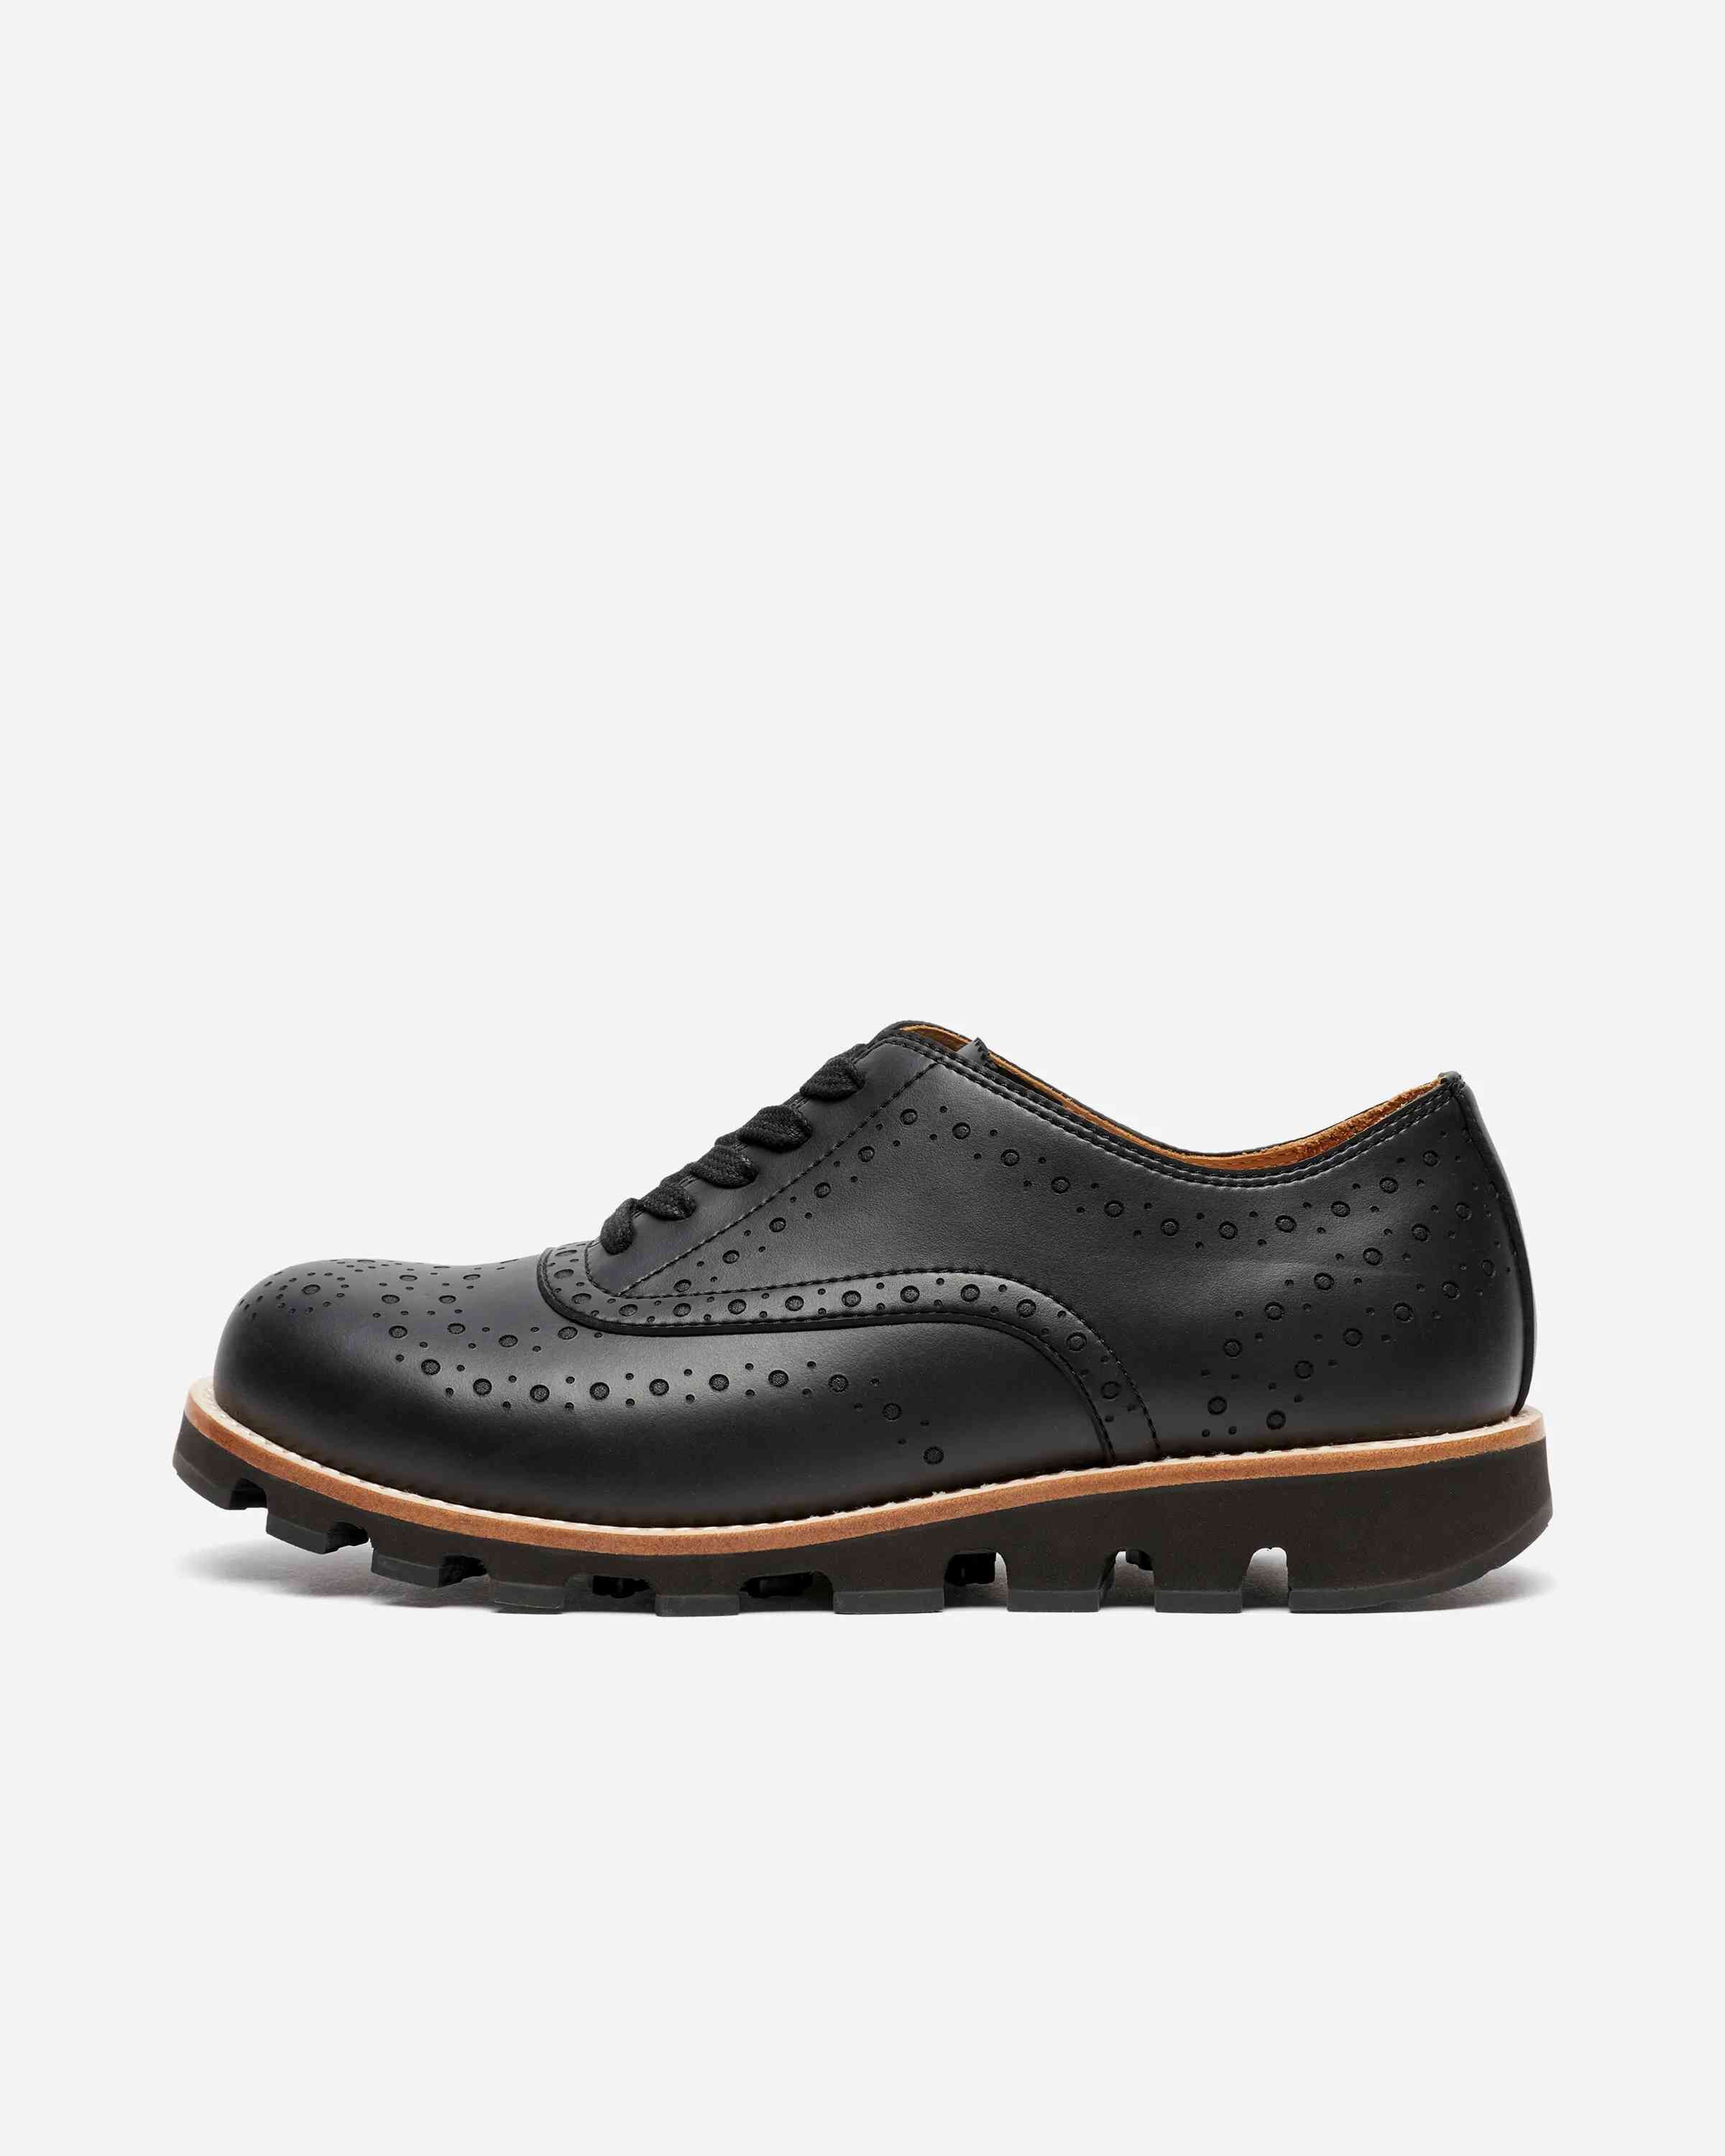 Oxford Shoes Black | | Vibram